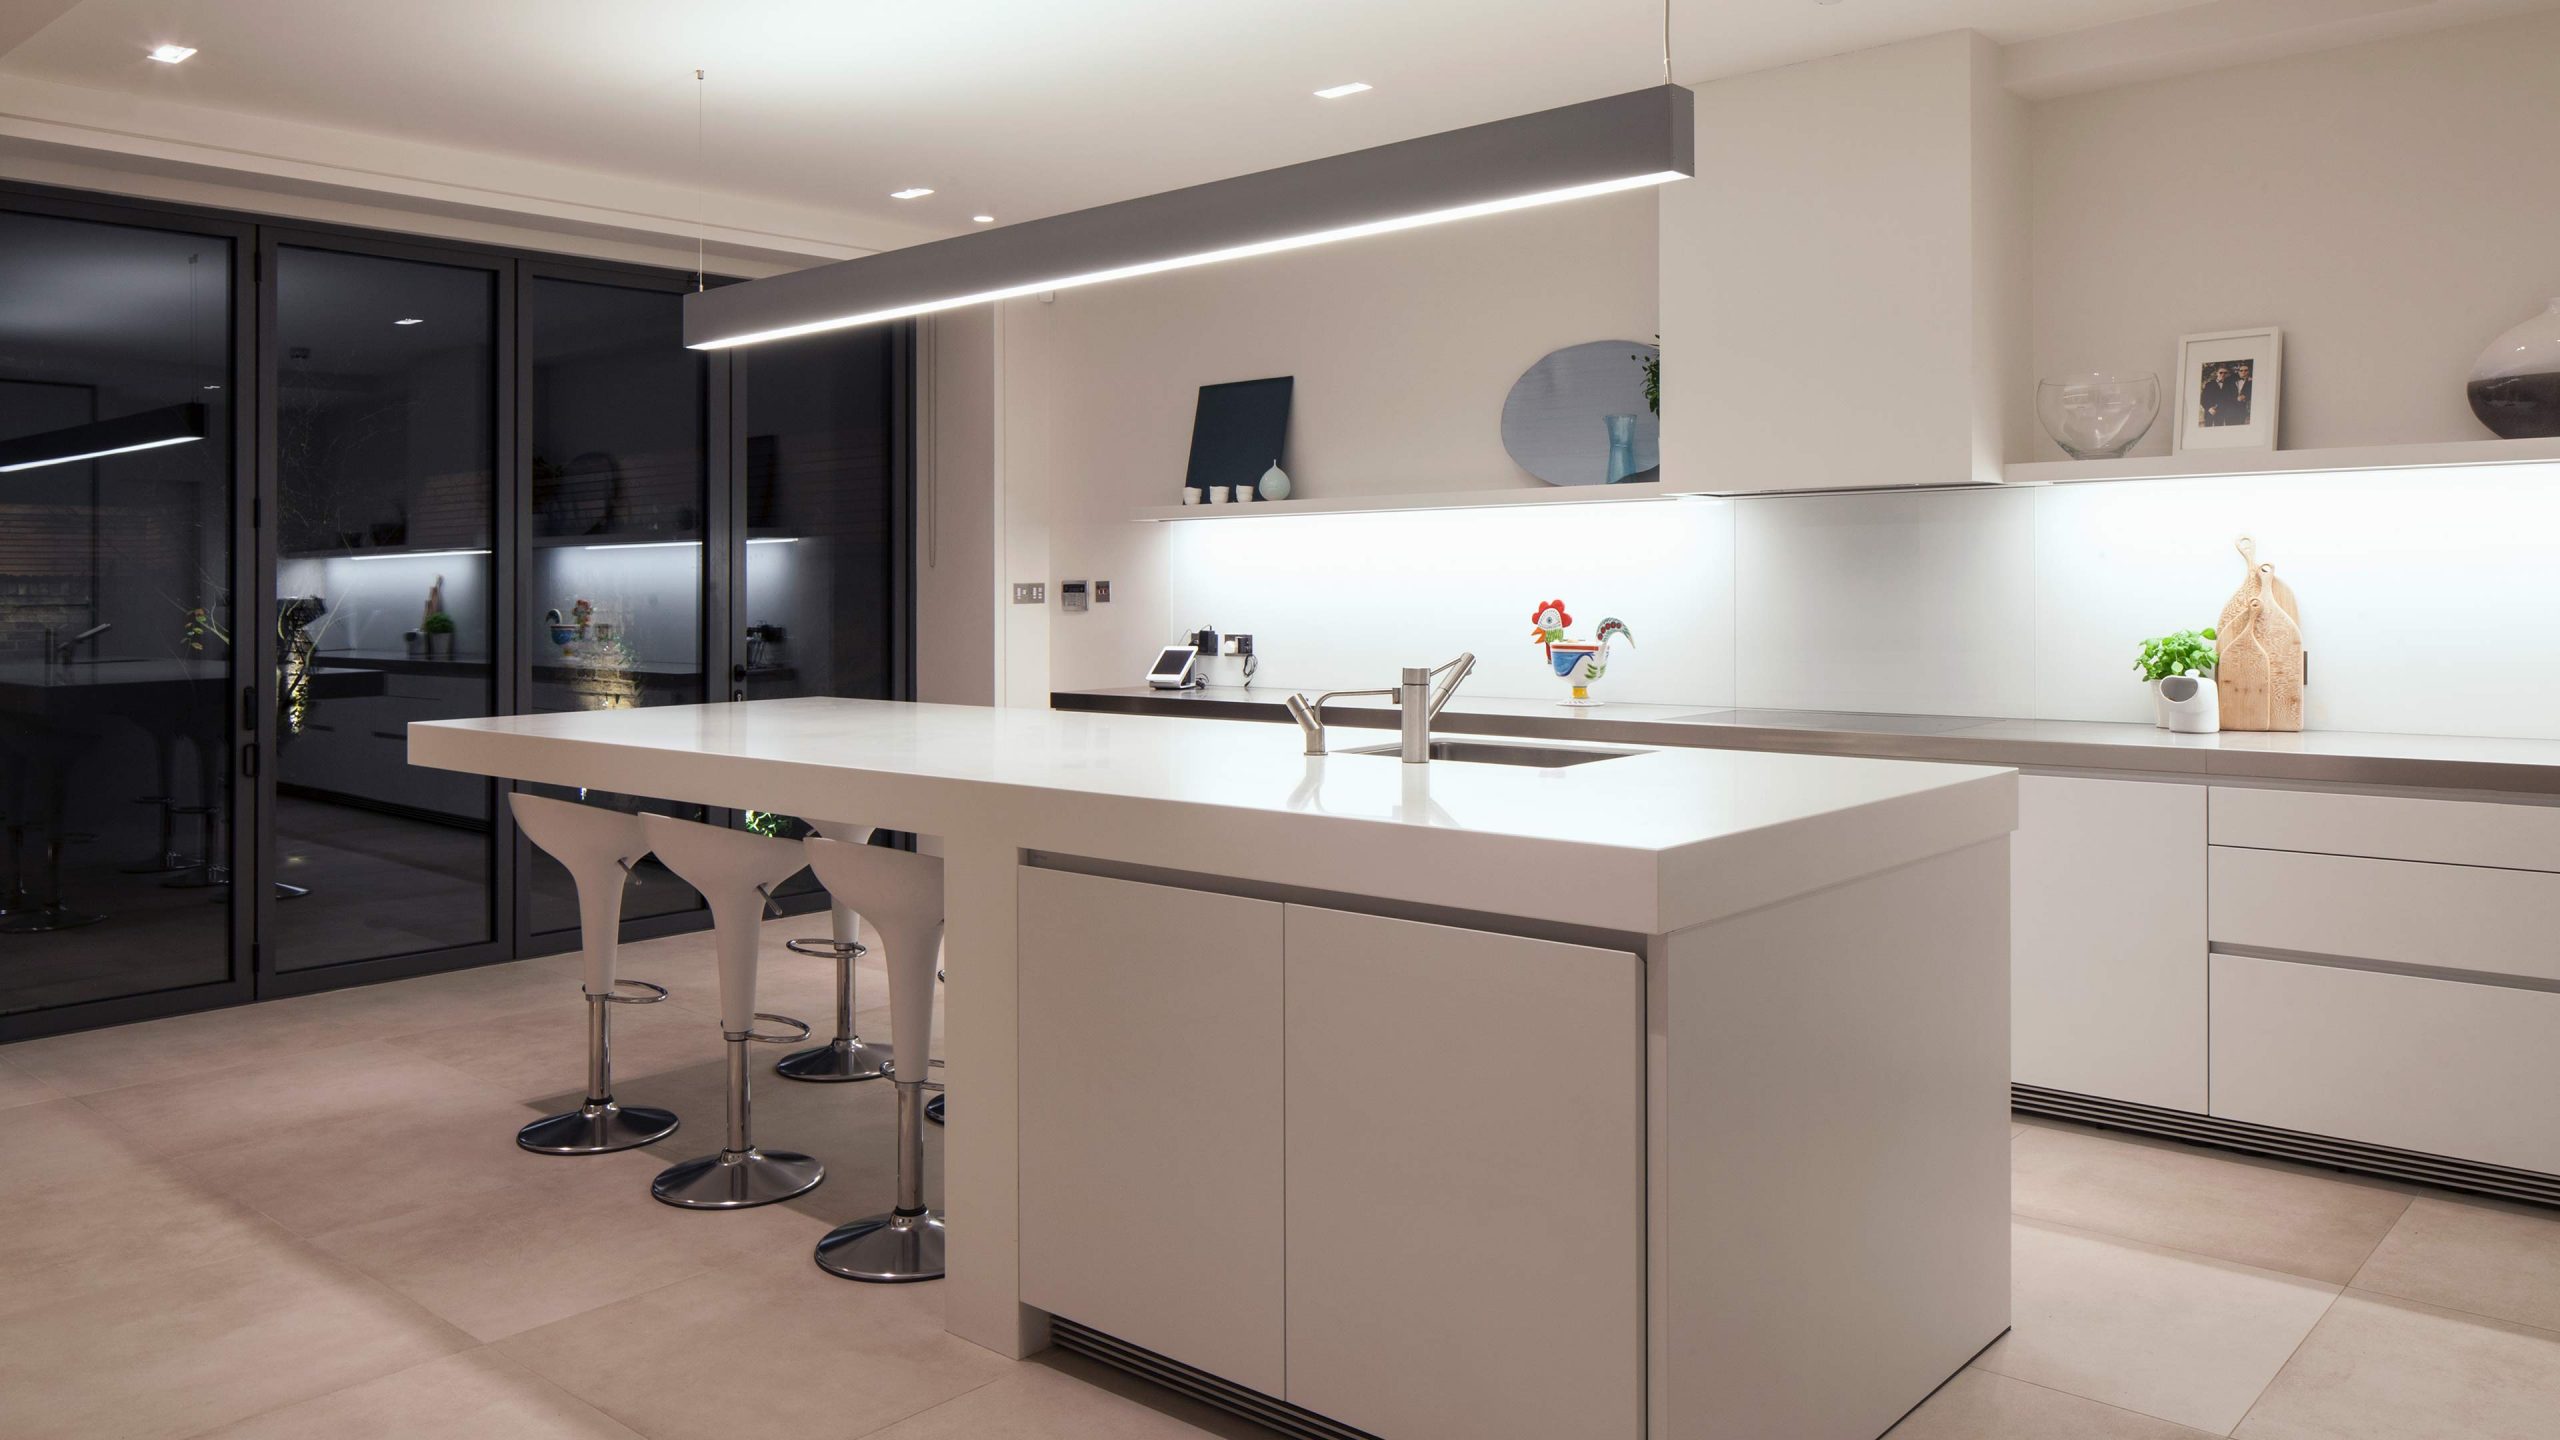 Residential Lighting Design Kitchen Interior Luxury Home Sustainable Solution Consultants Studio N